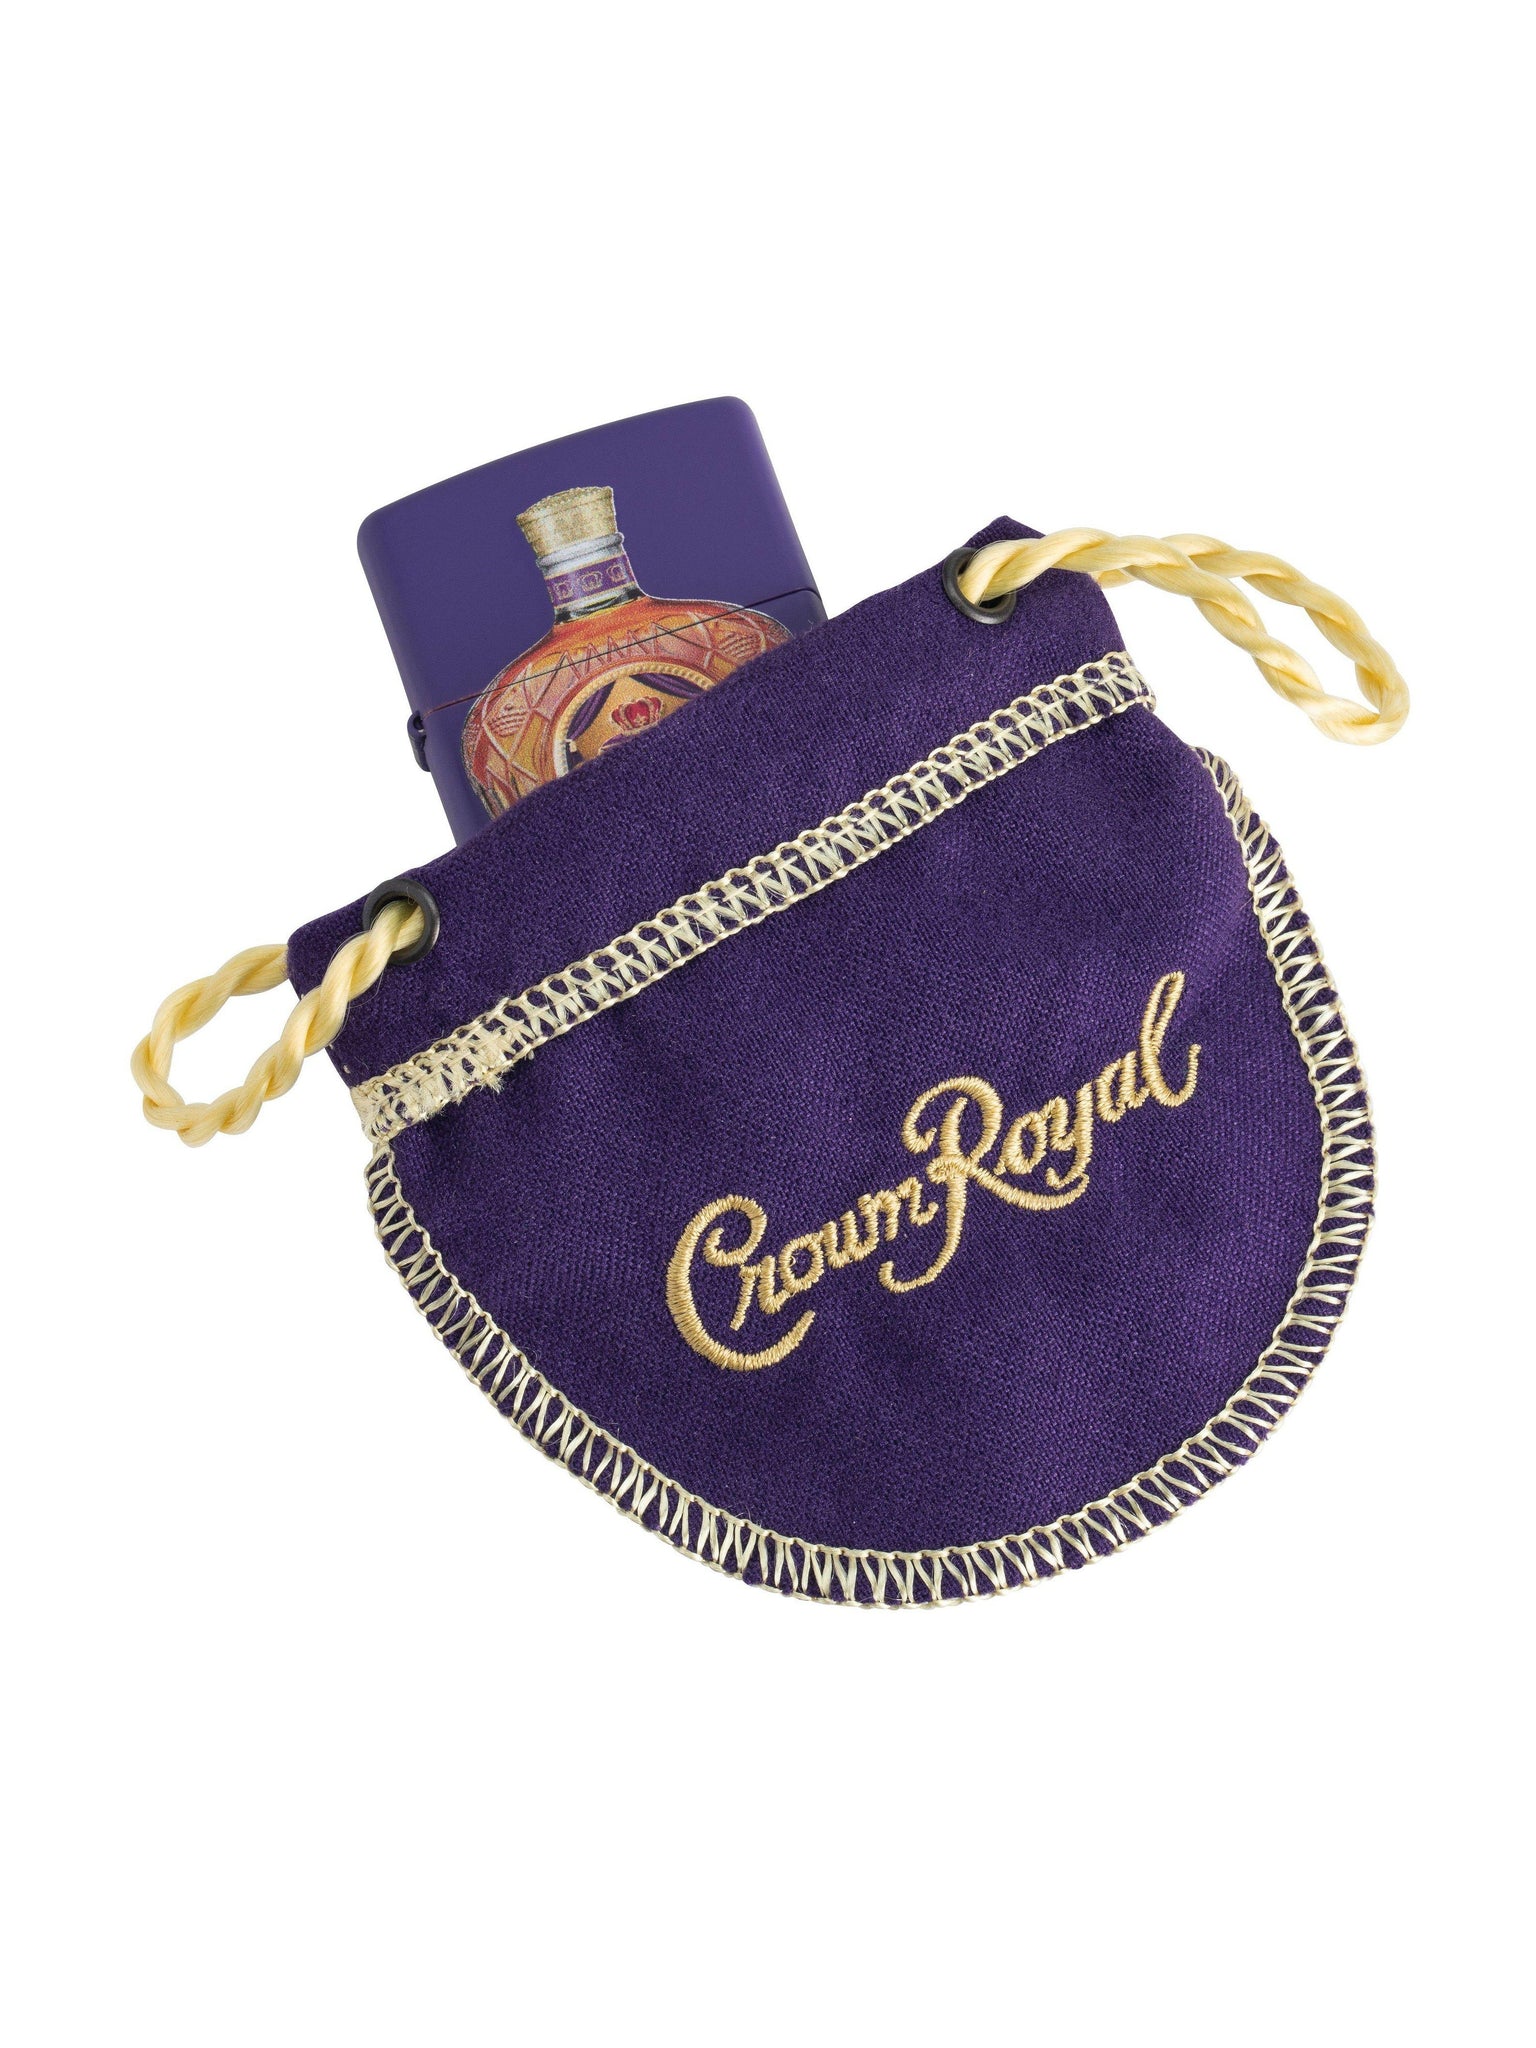 Zippo Crown Royal Lighter with Pouch, Texture Print - Purple Matte 49661